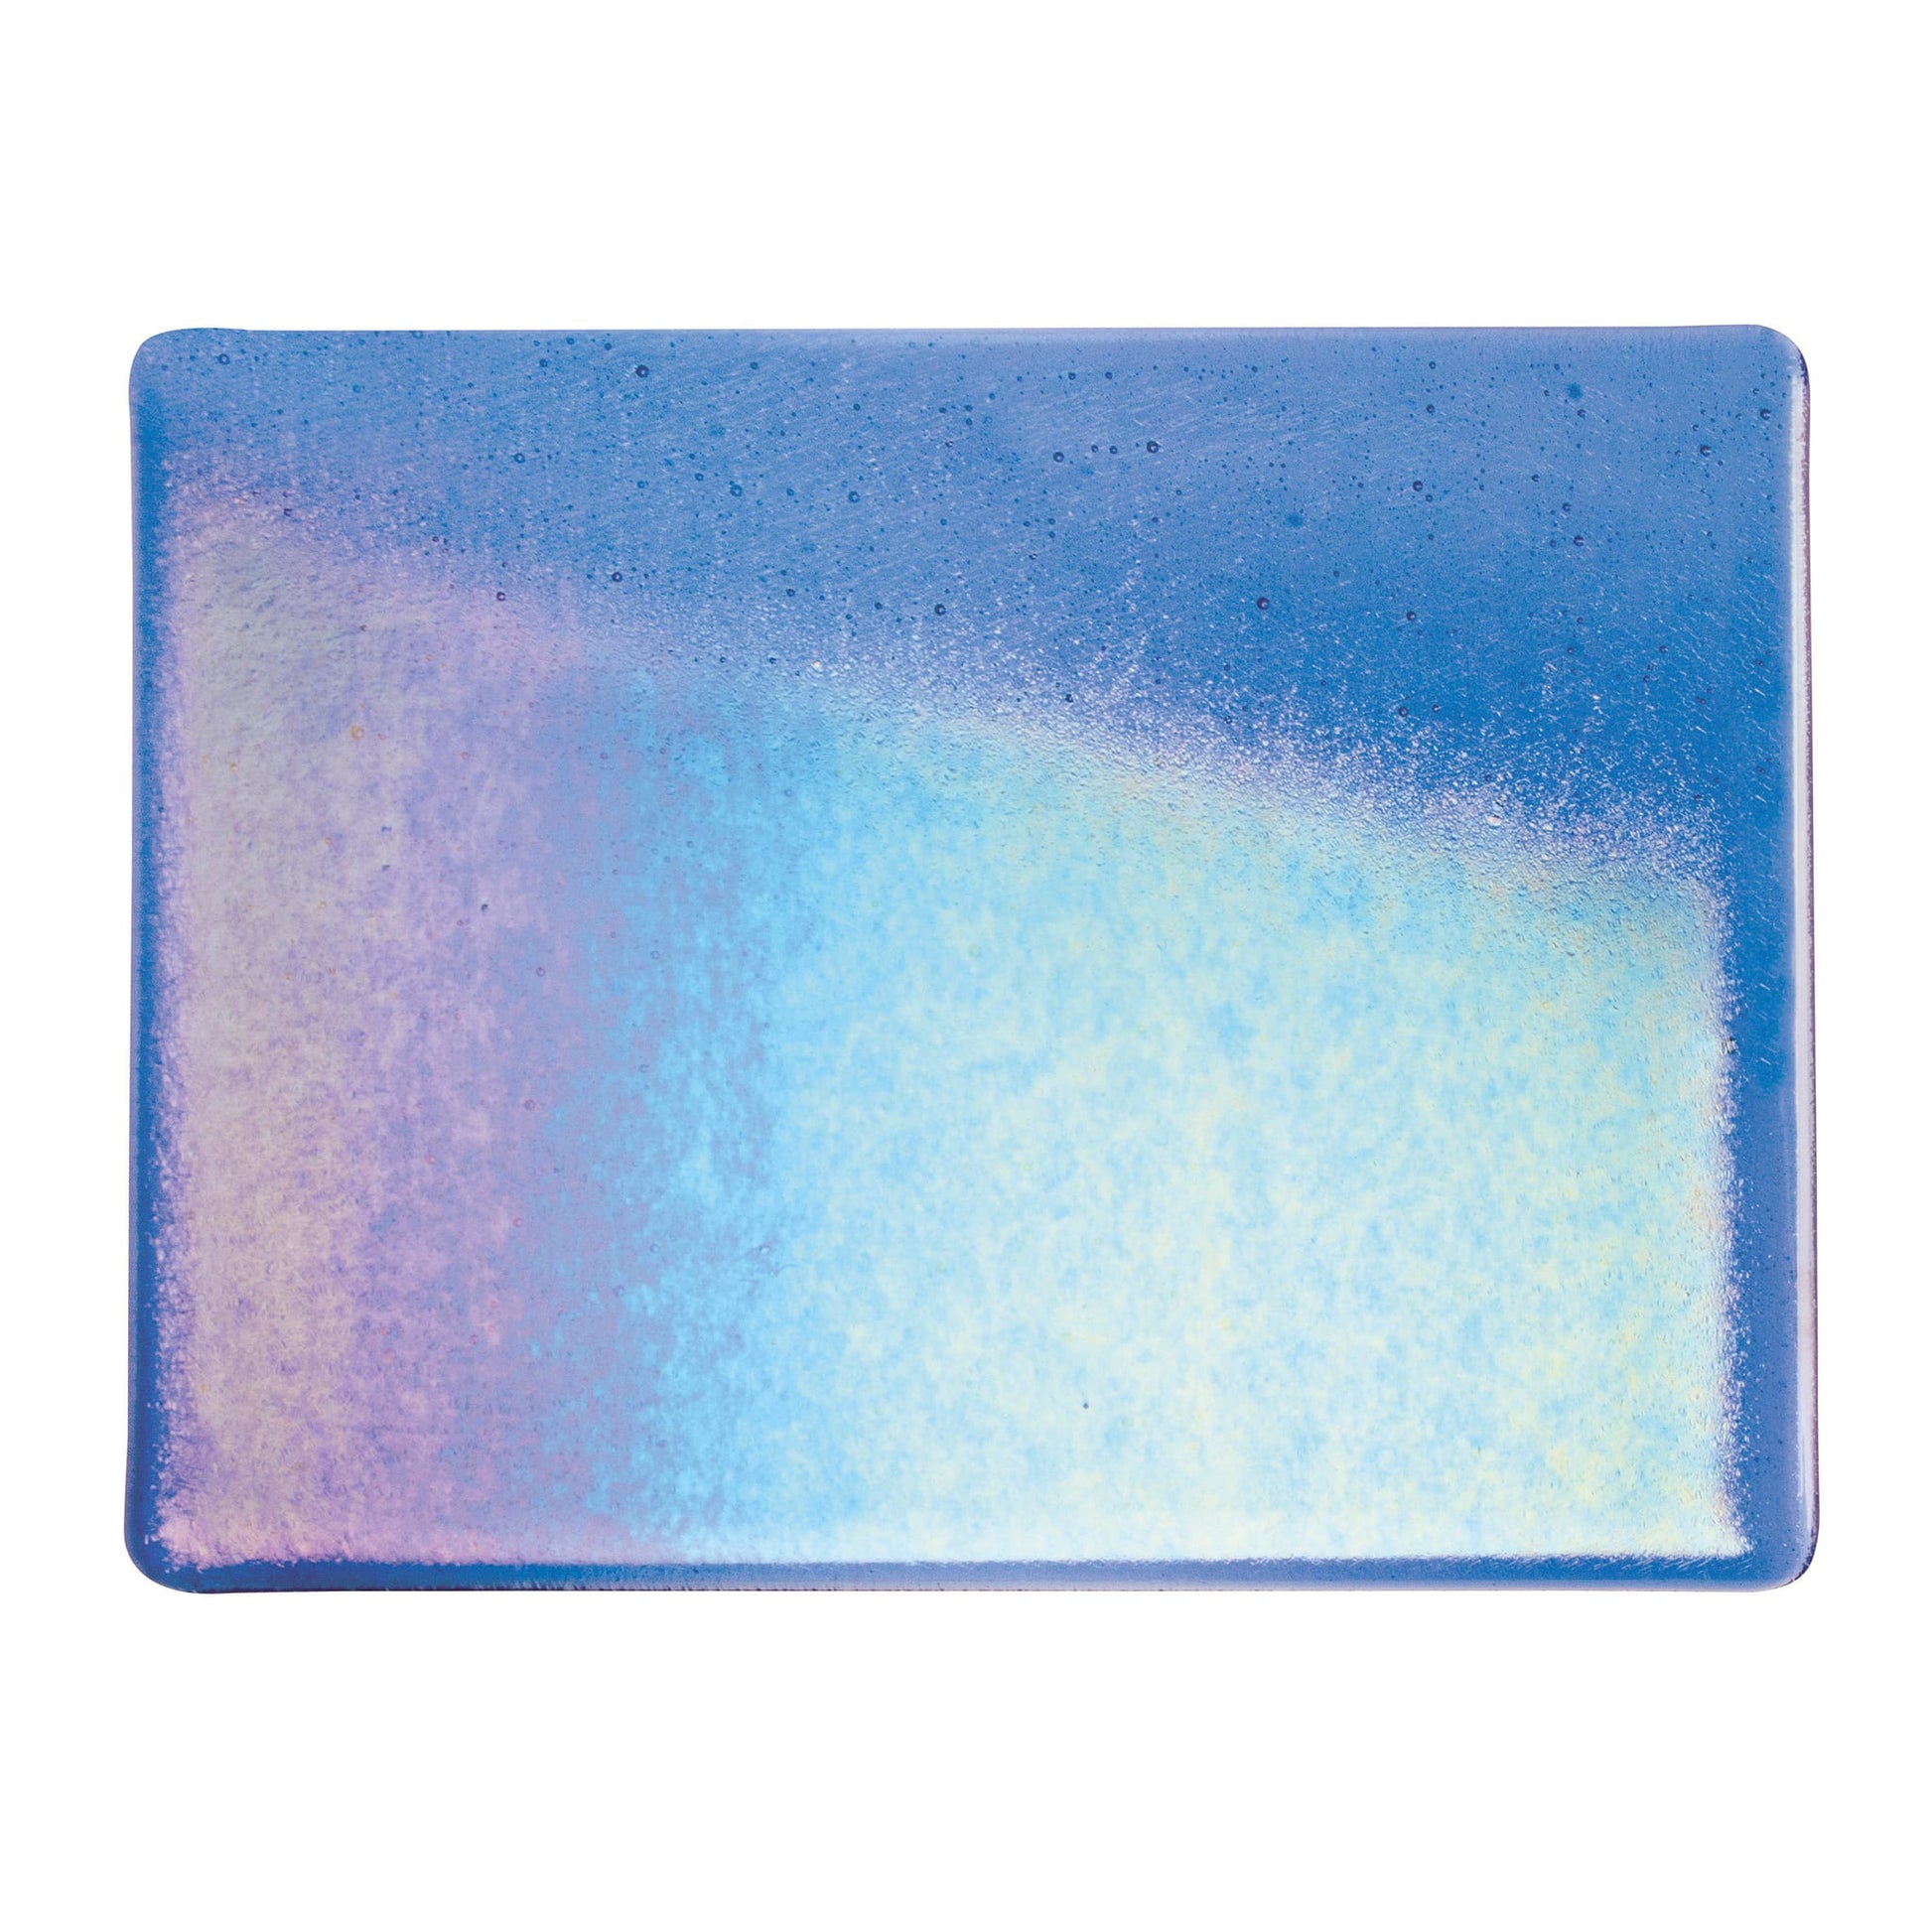 Bullseye COE90 Fusing Glass 001464 True Blue, Iridescent, Rainbow Handy Sheet